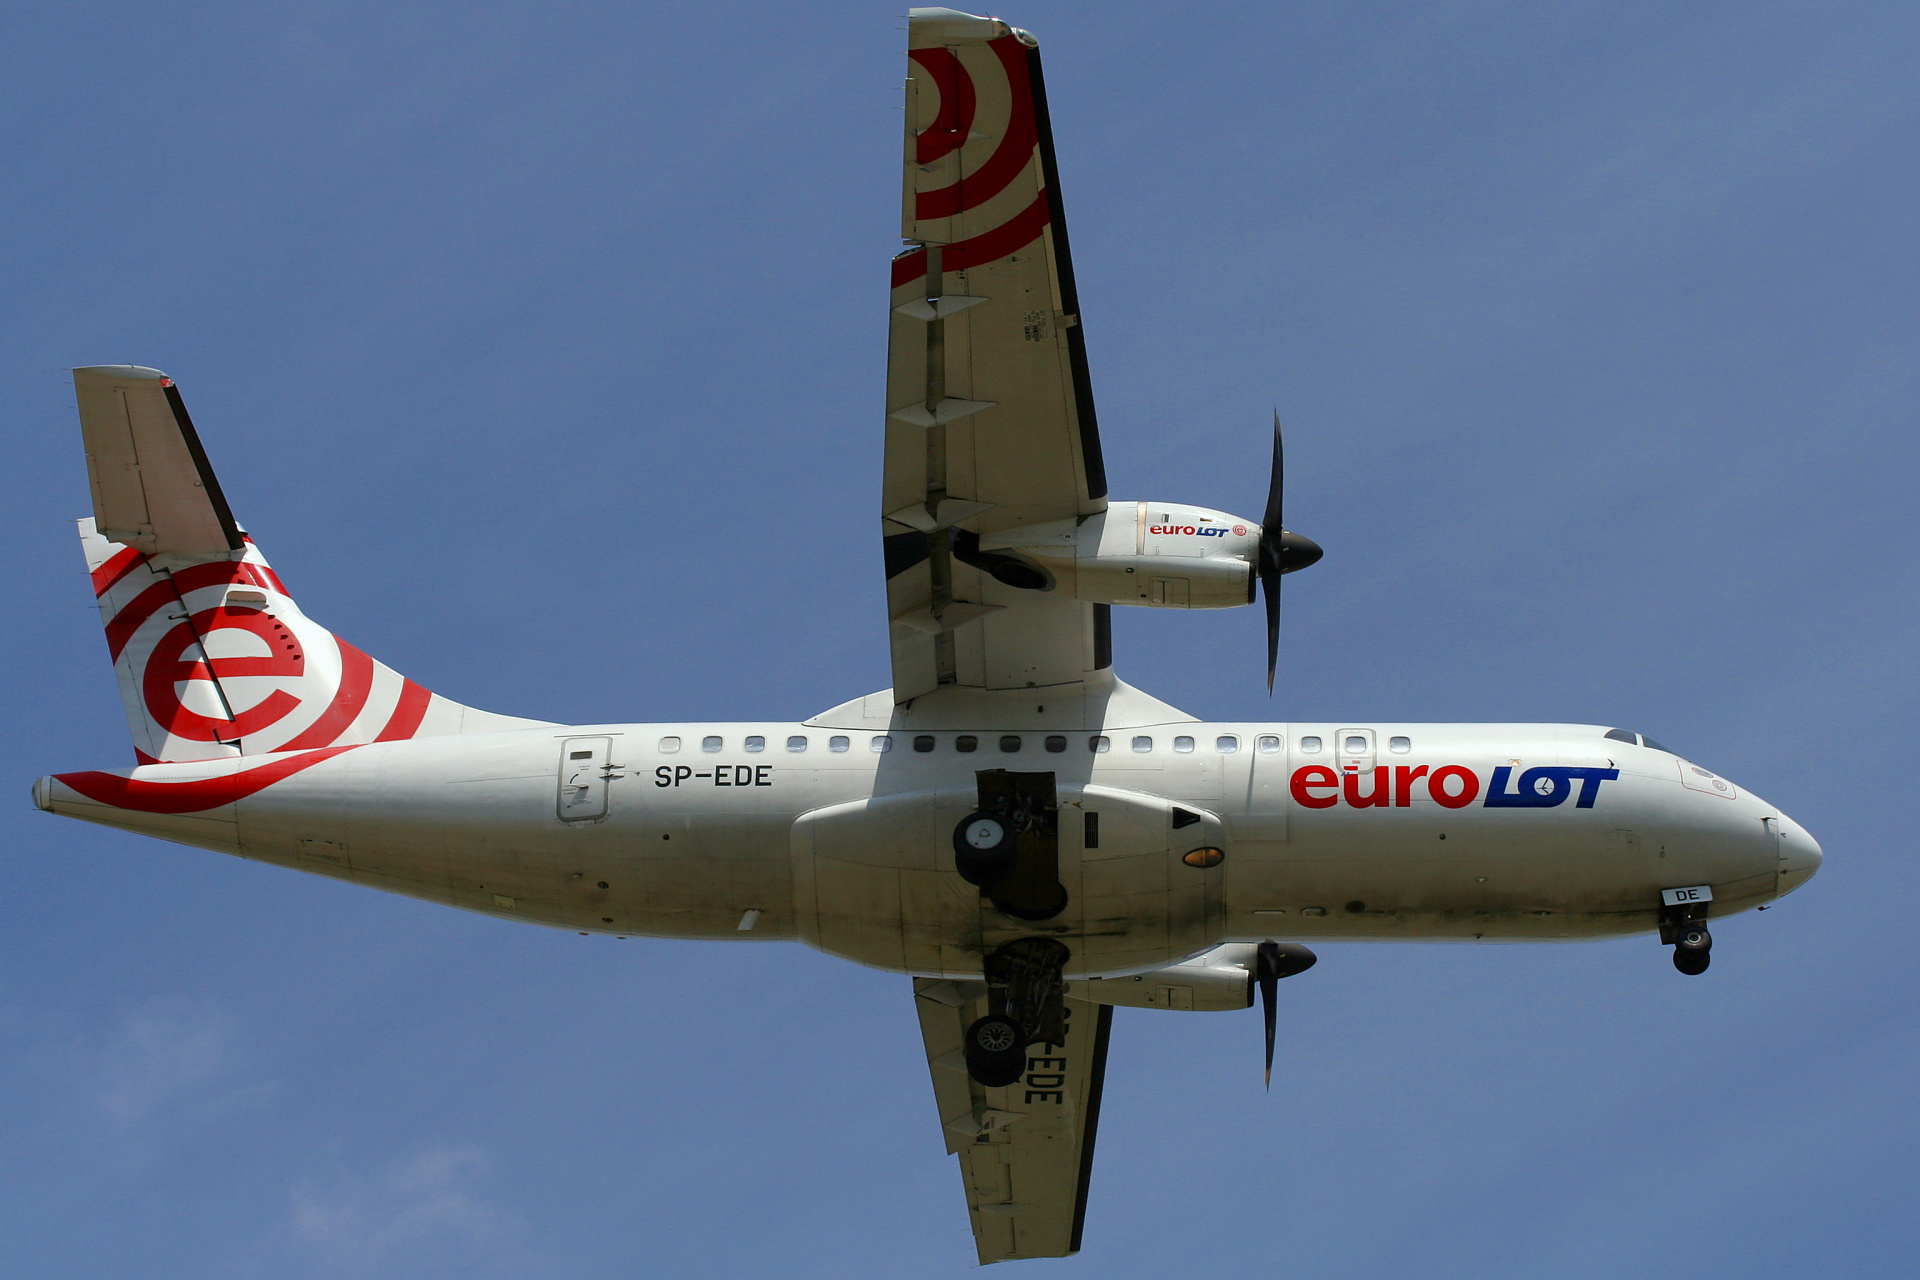 SP-EDE (Samoloty » Spotting na EPWA » ATR 42 » EuroLOT)